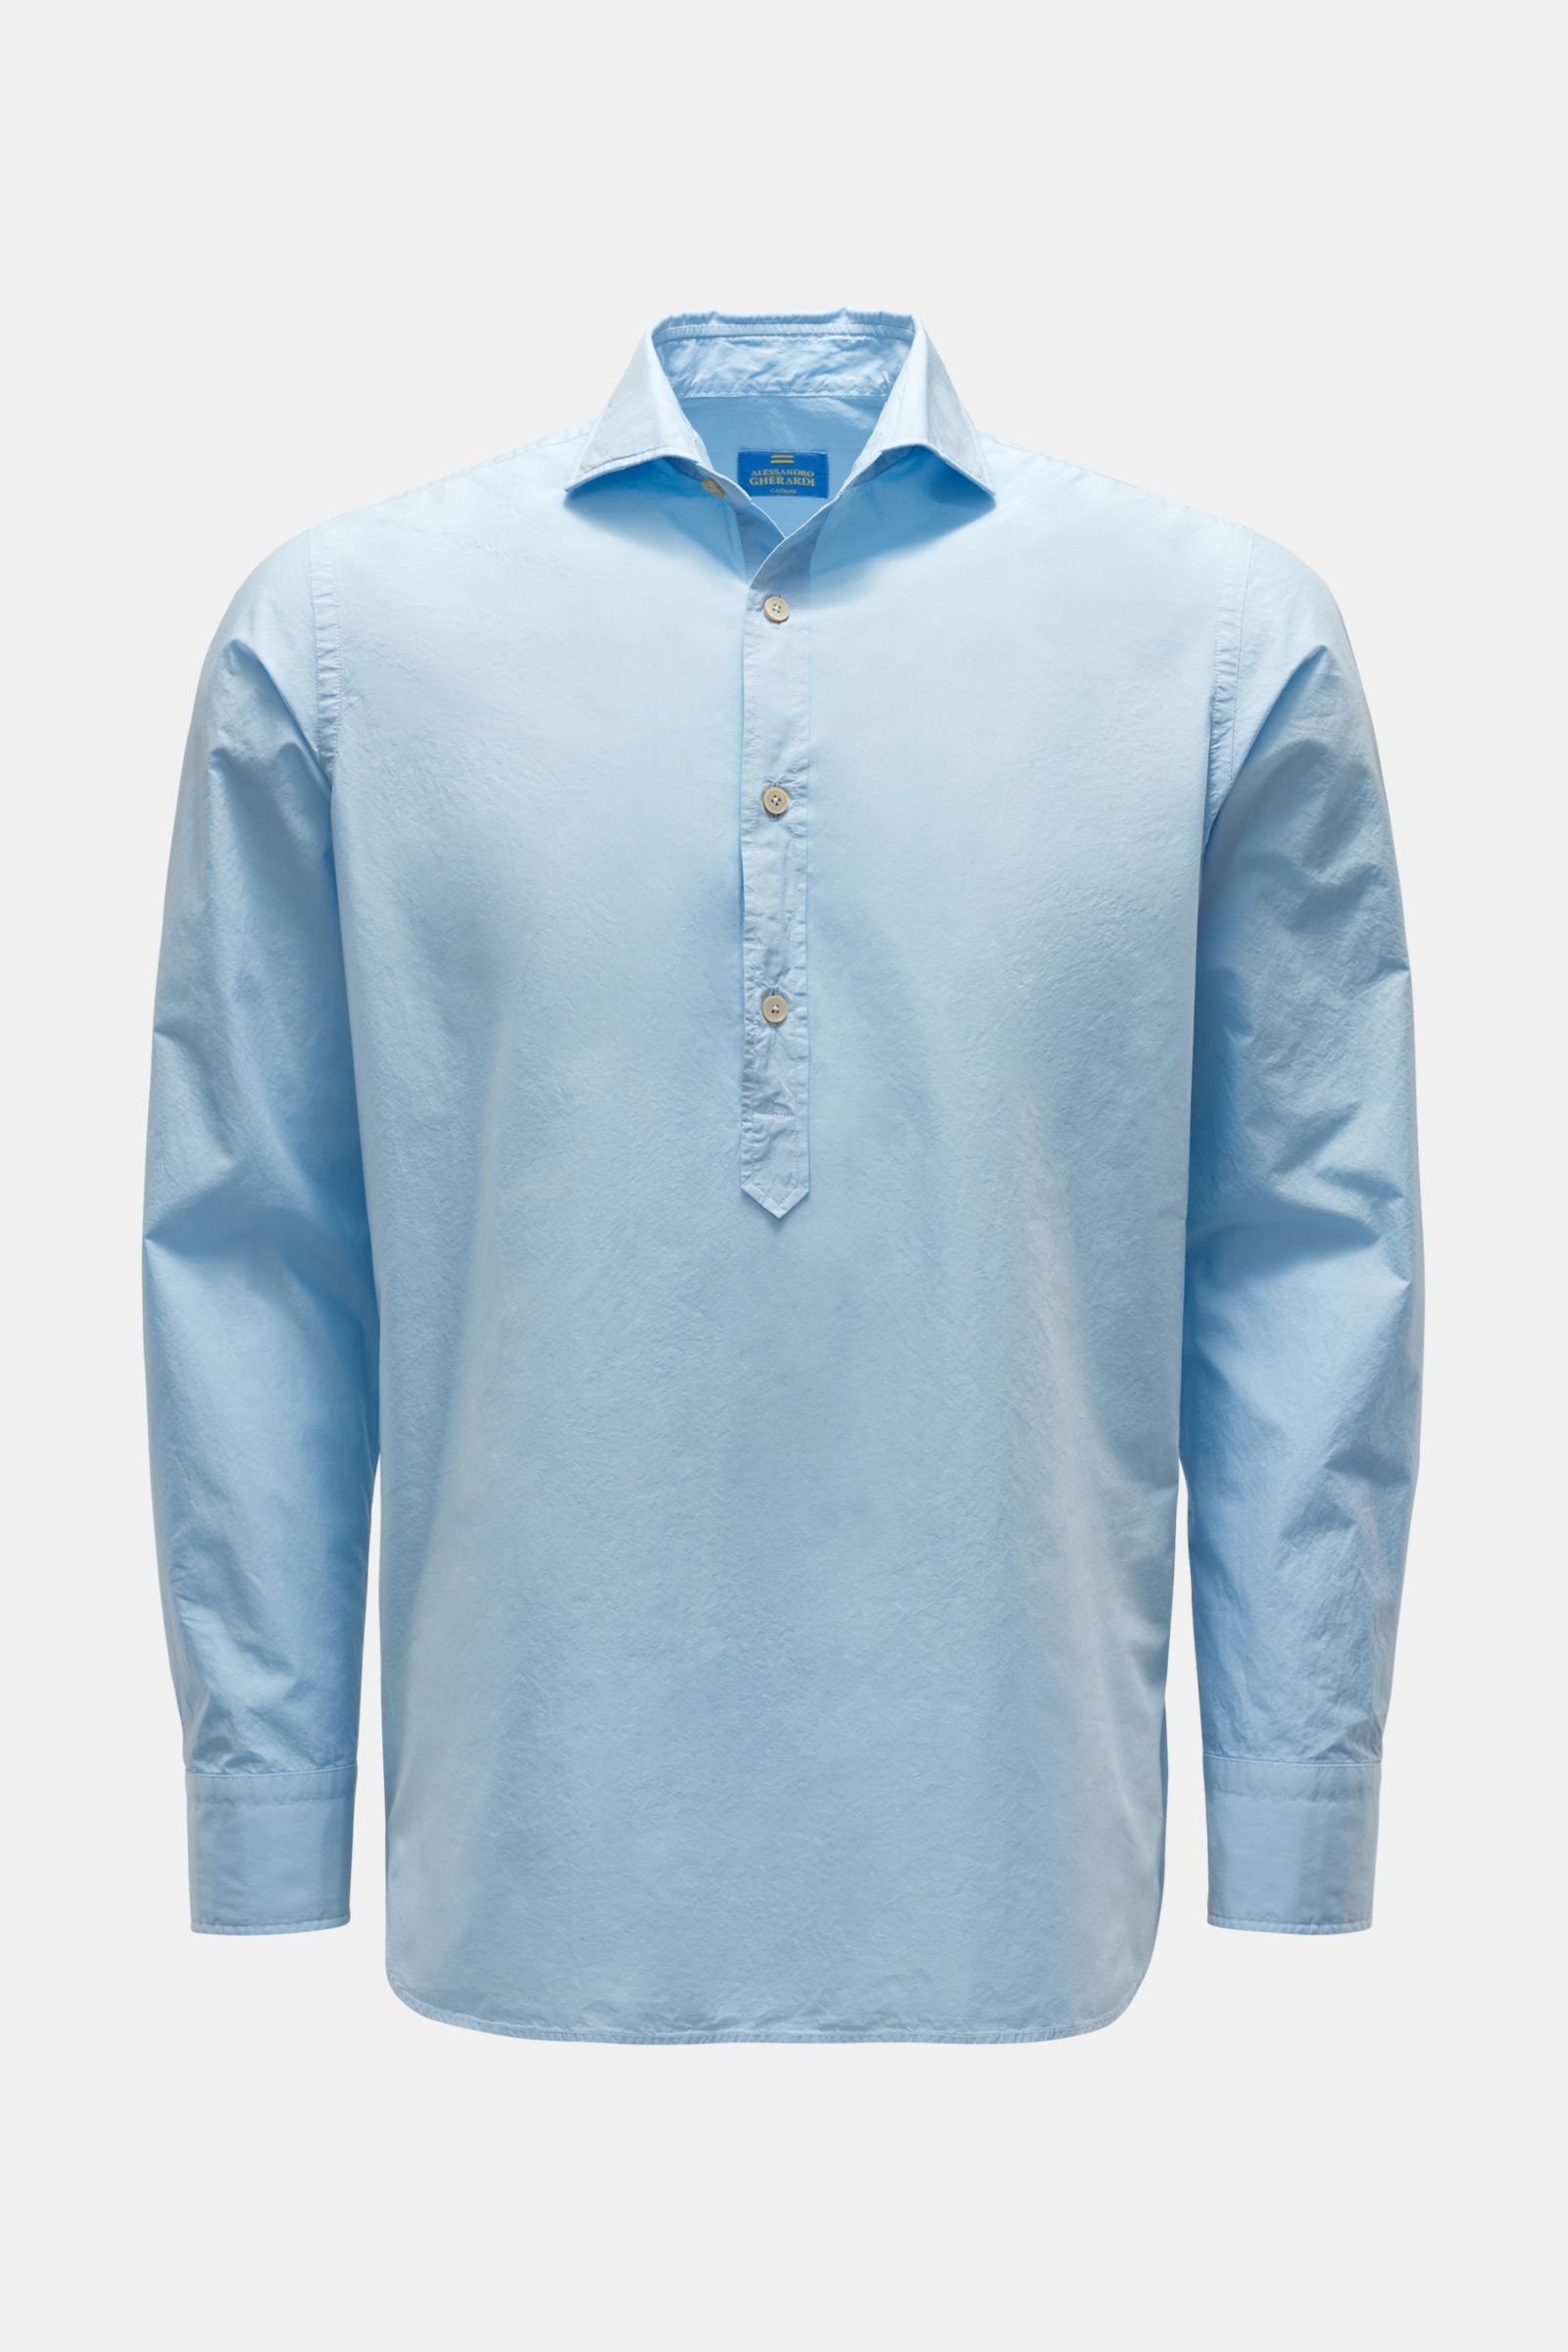 Popover shirt 'Polos' shark collar light blue